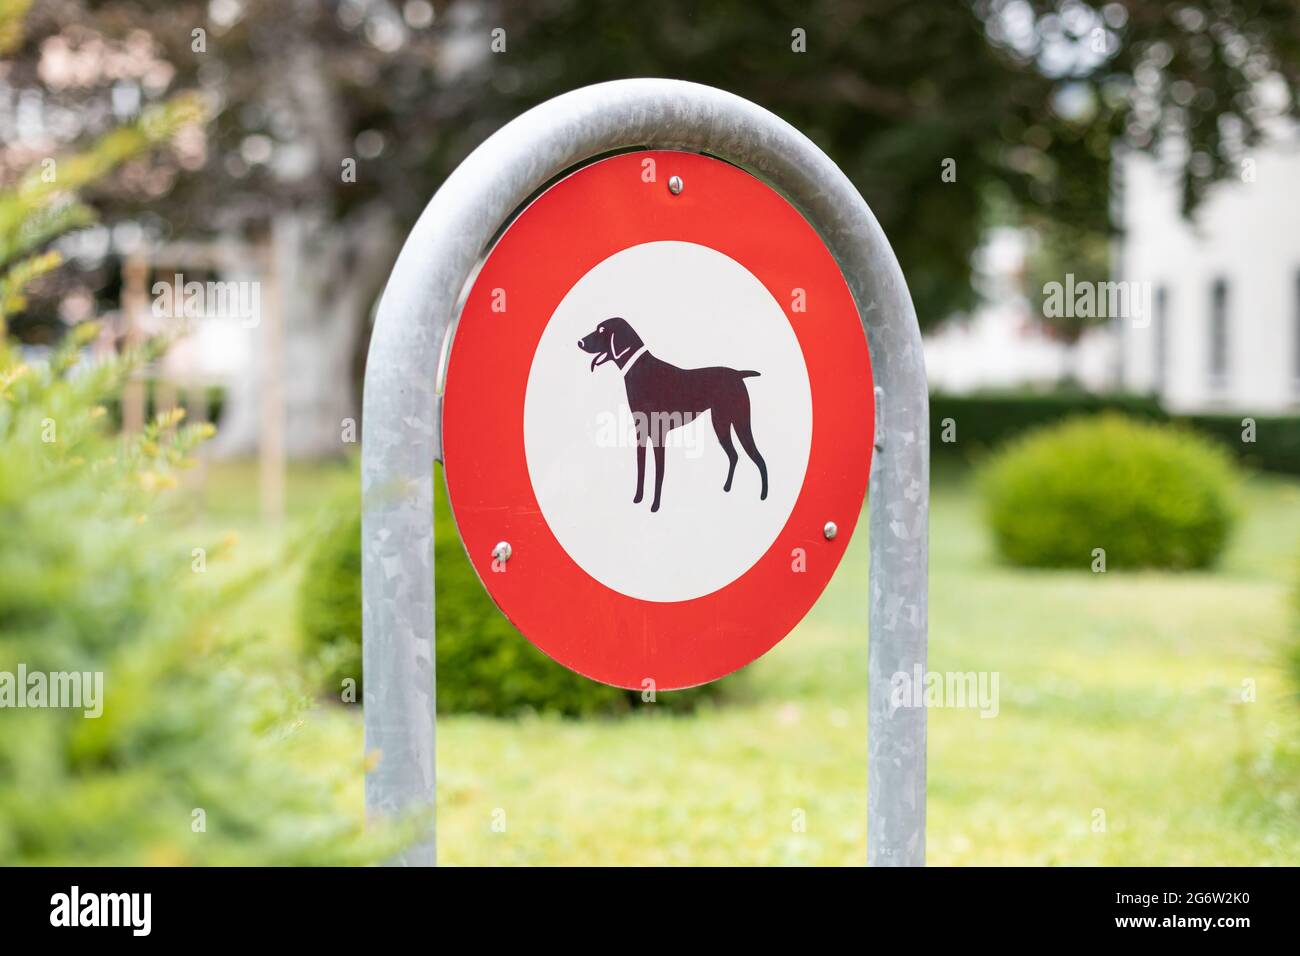 No dog sign in chur, switzerland Stock Photo